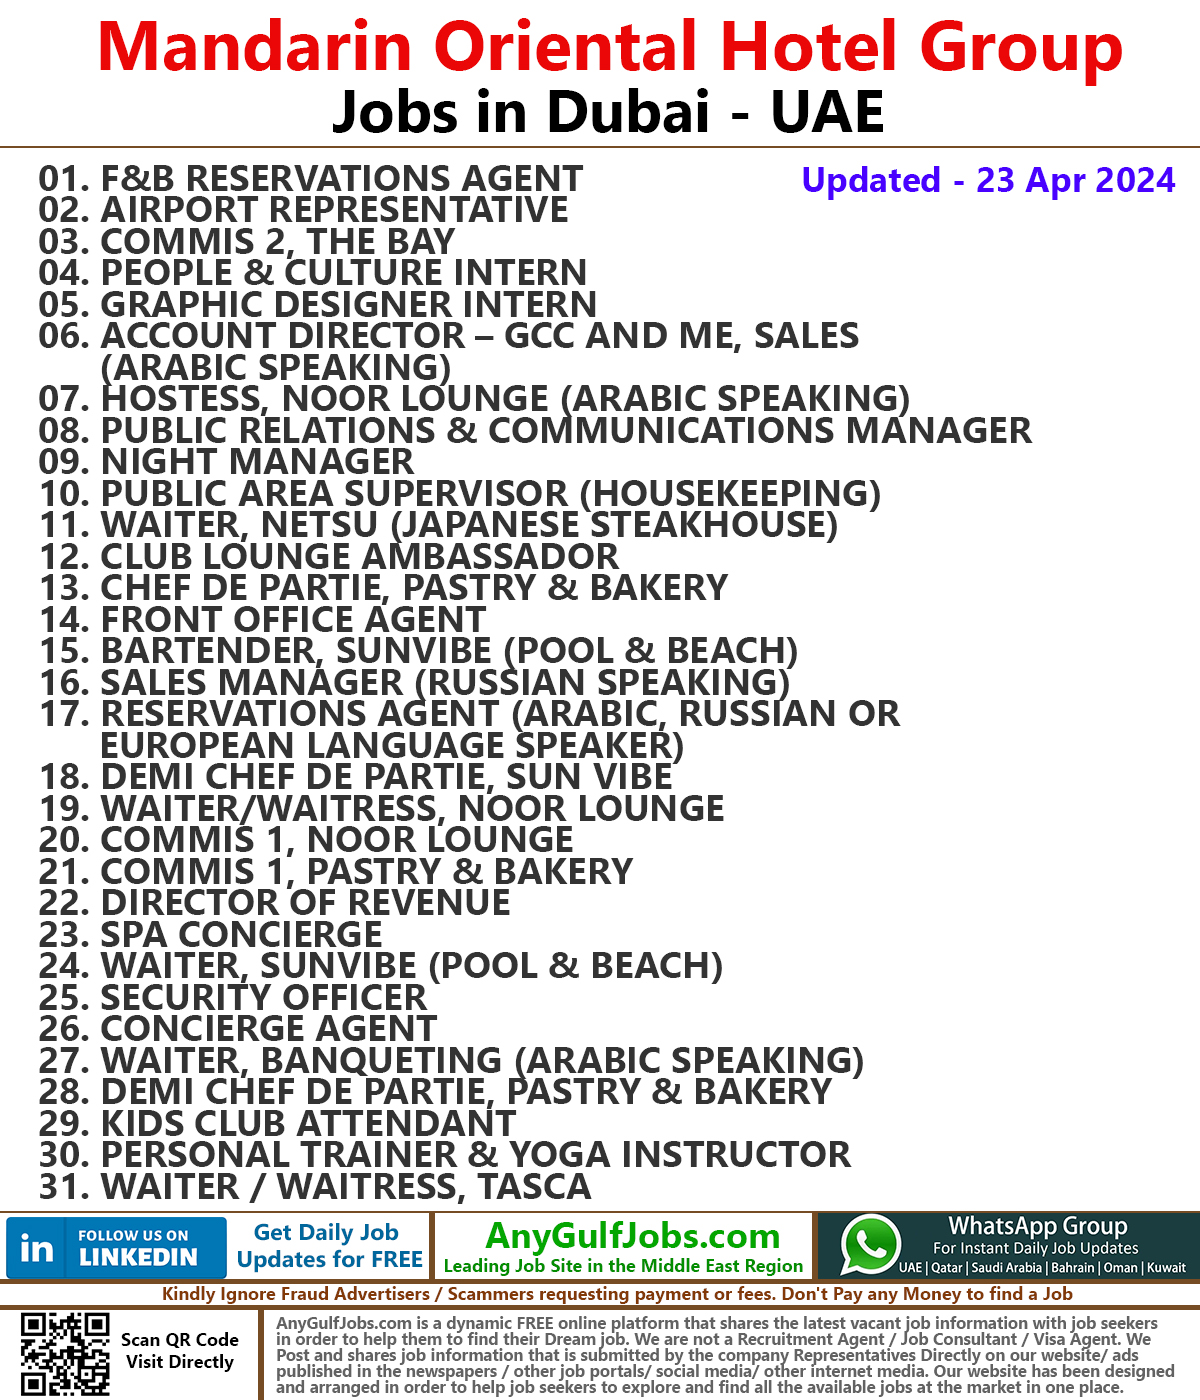 Mandarin Oriental Hotel Group Jobs in Dubai - UAE